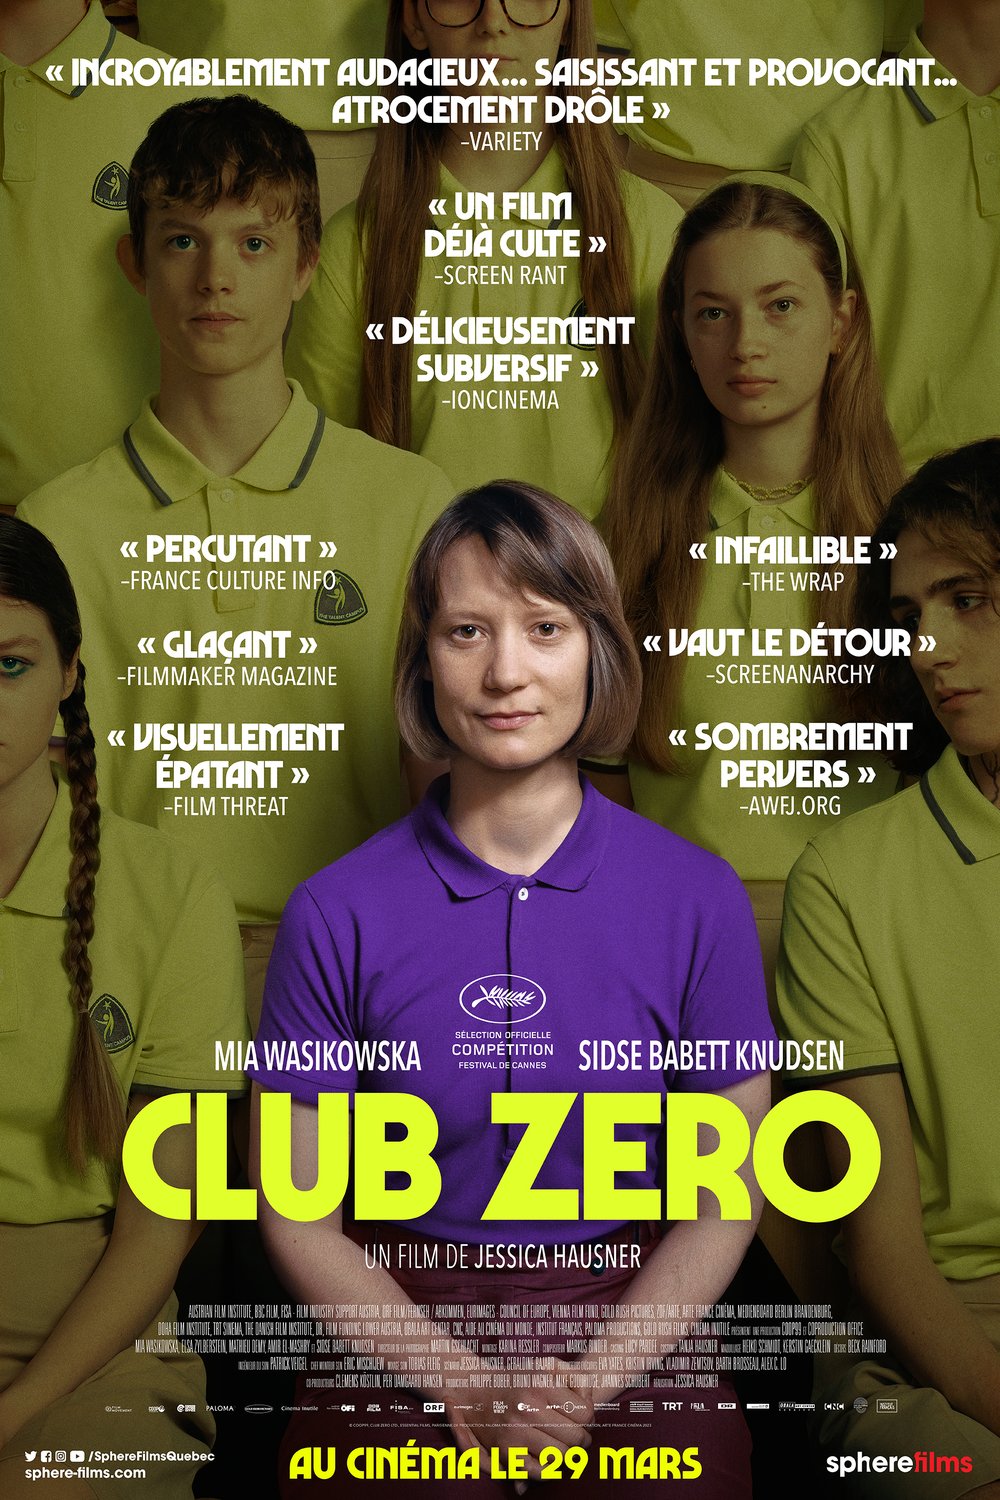 L'affiche du film Club Zéro v.f.